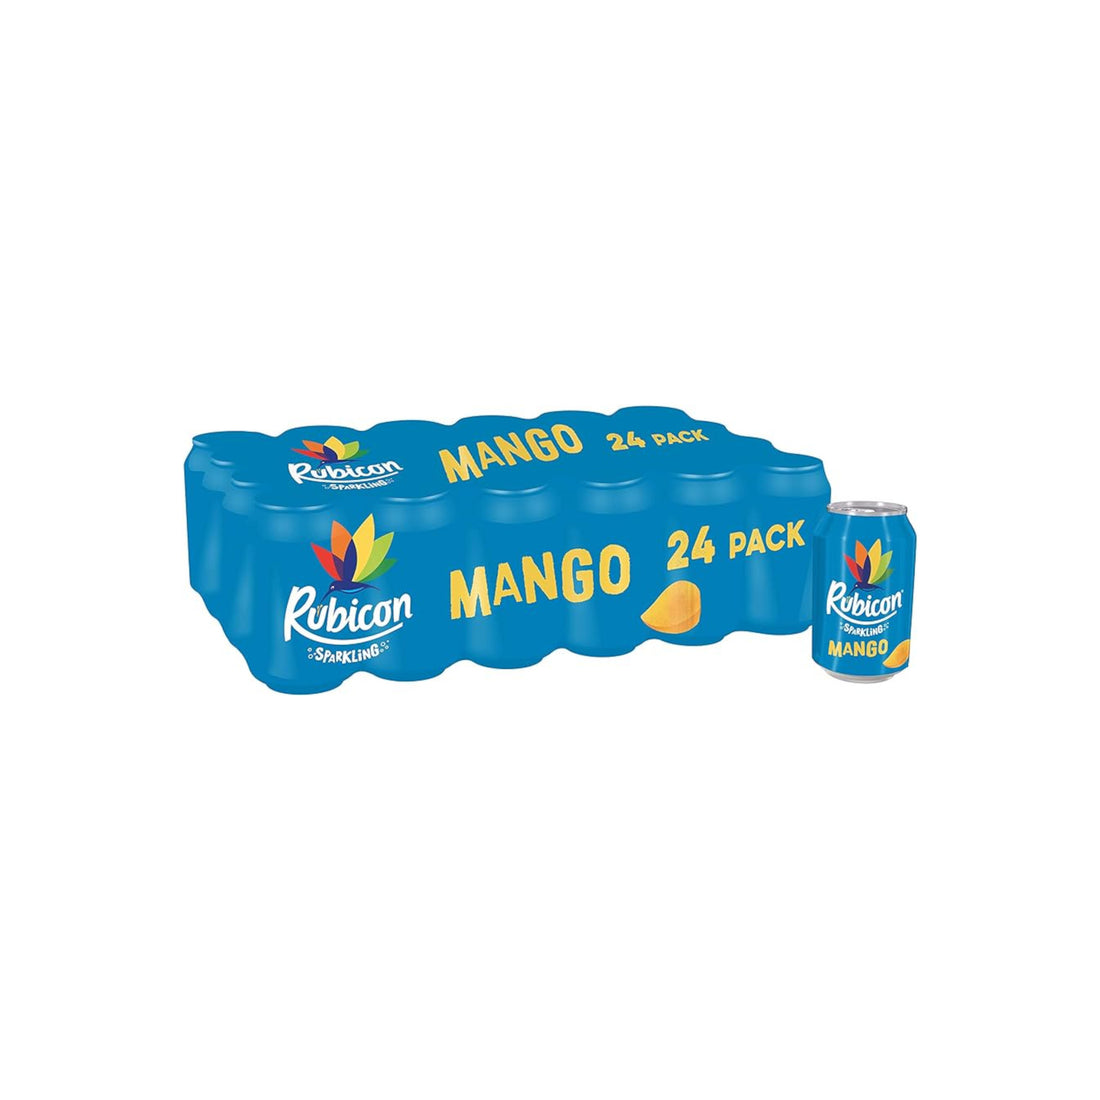 Rubicon Mango 24 Pack